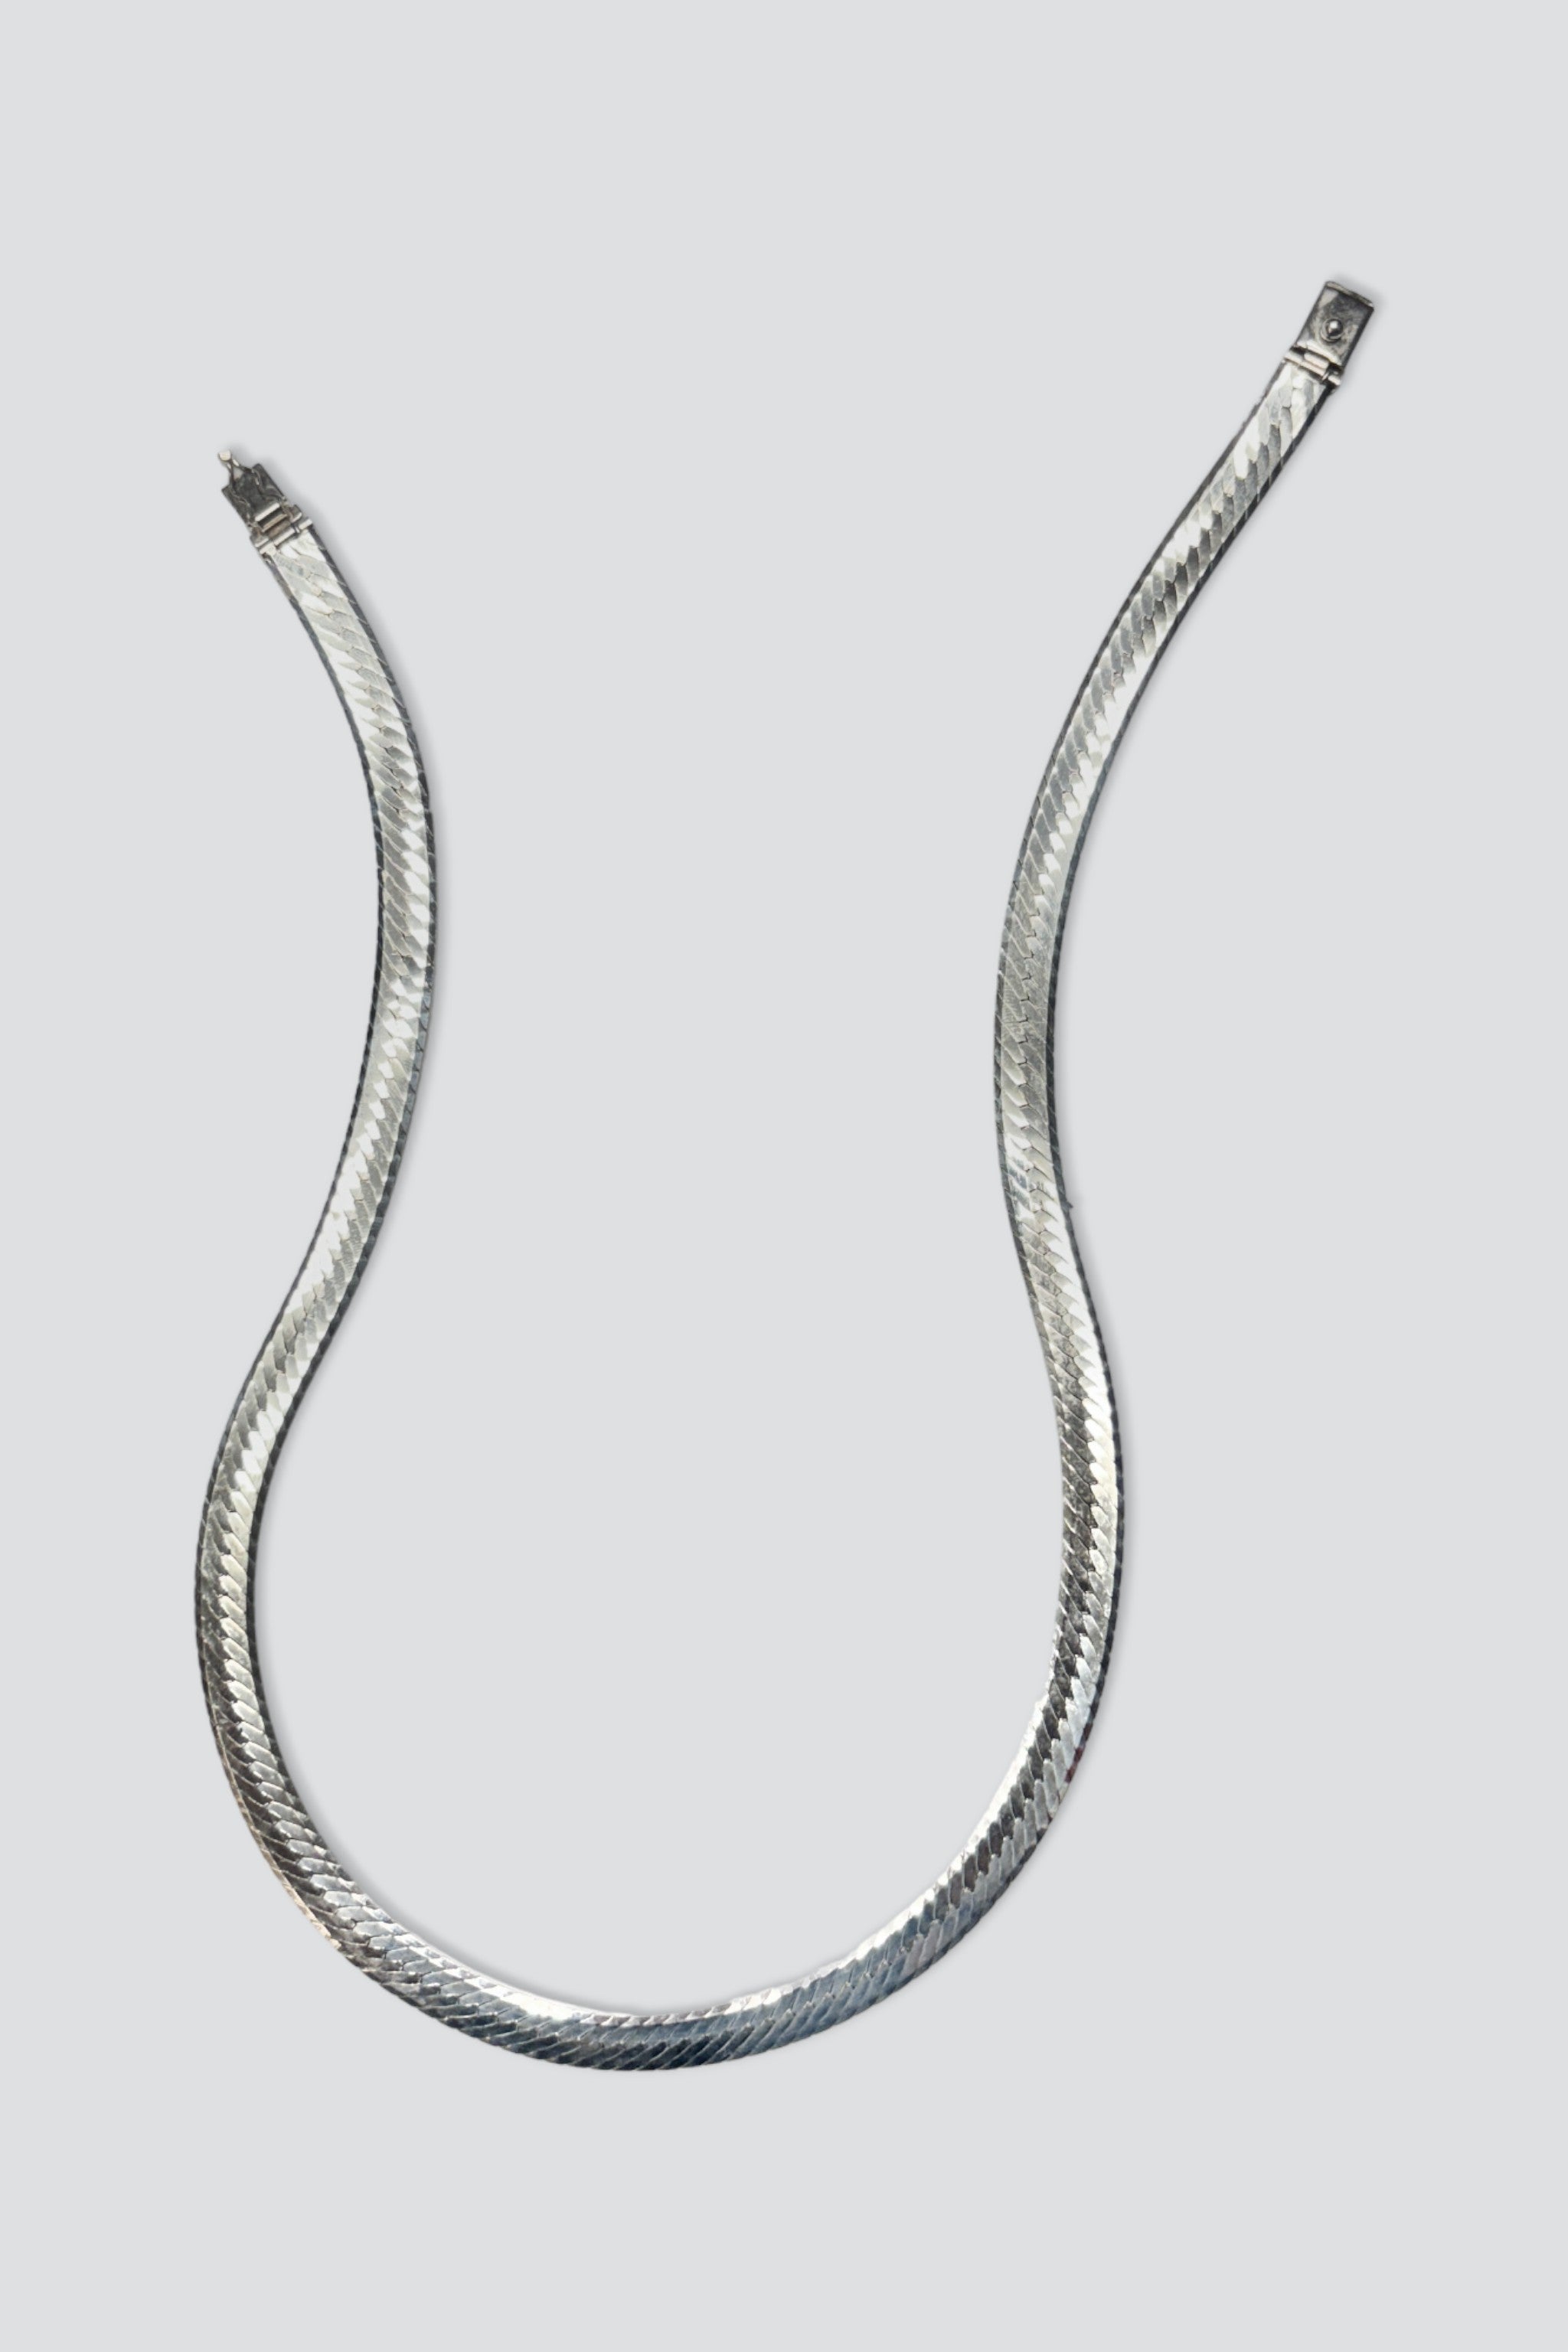 Sterling Silver Wide Heavy Herringbone Chain